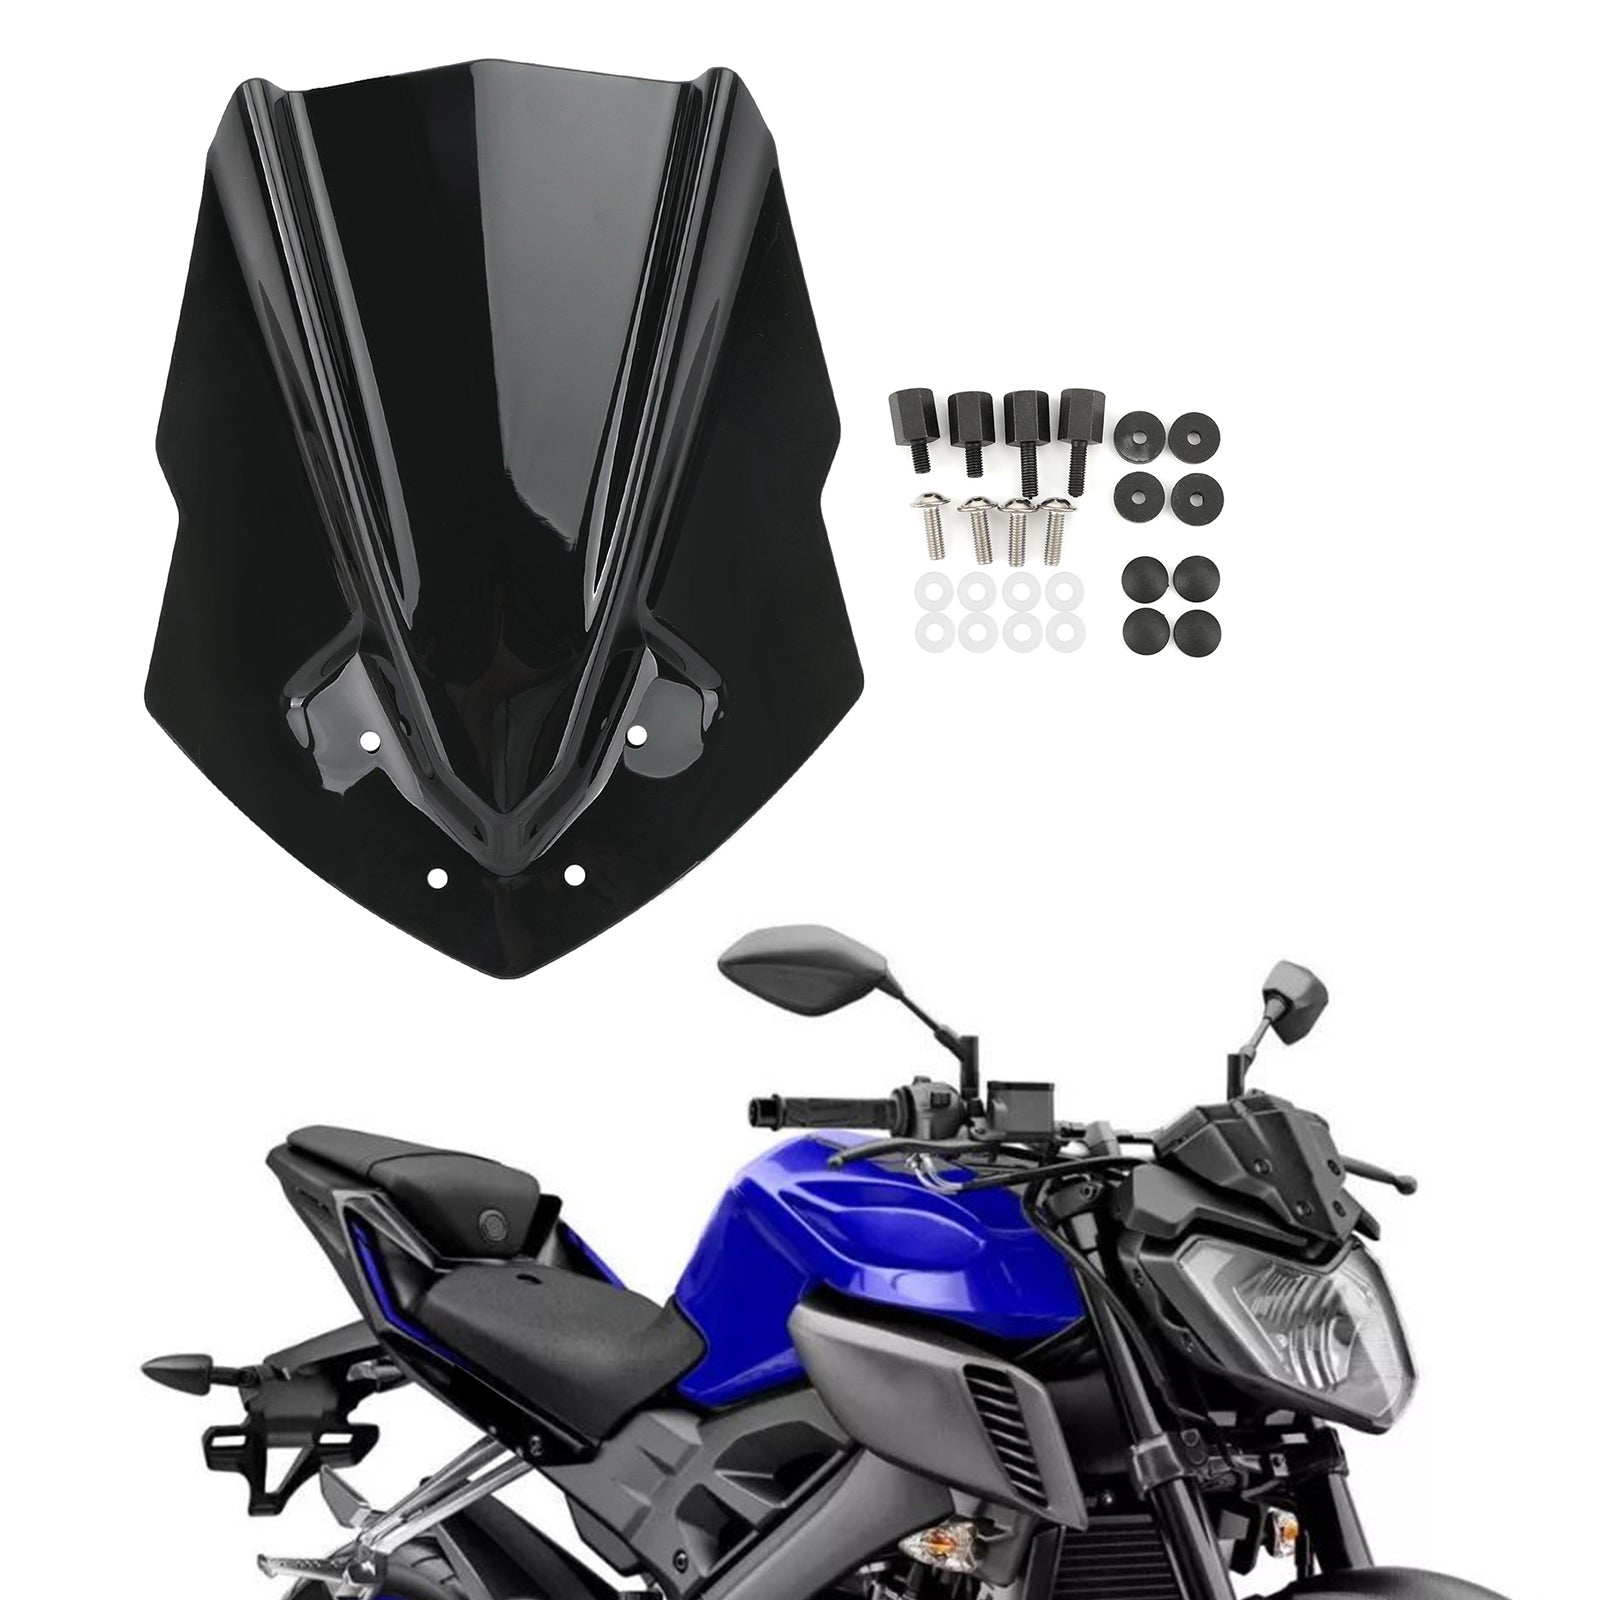 Parabrisas de plástico ABS para motocicleta Yamaha MT125 2015-2019 genérico